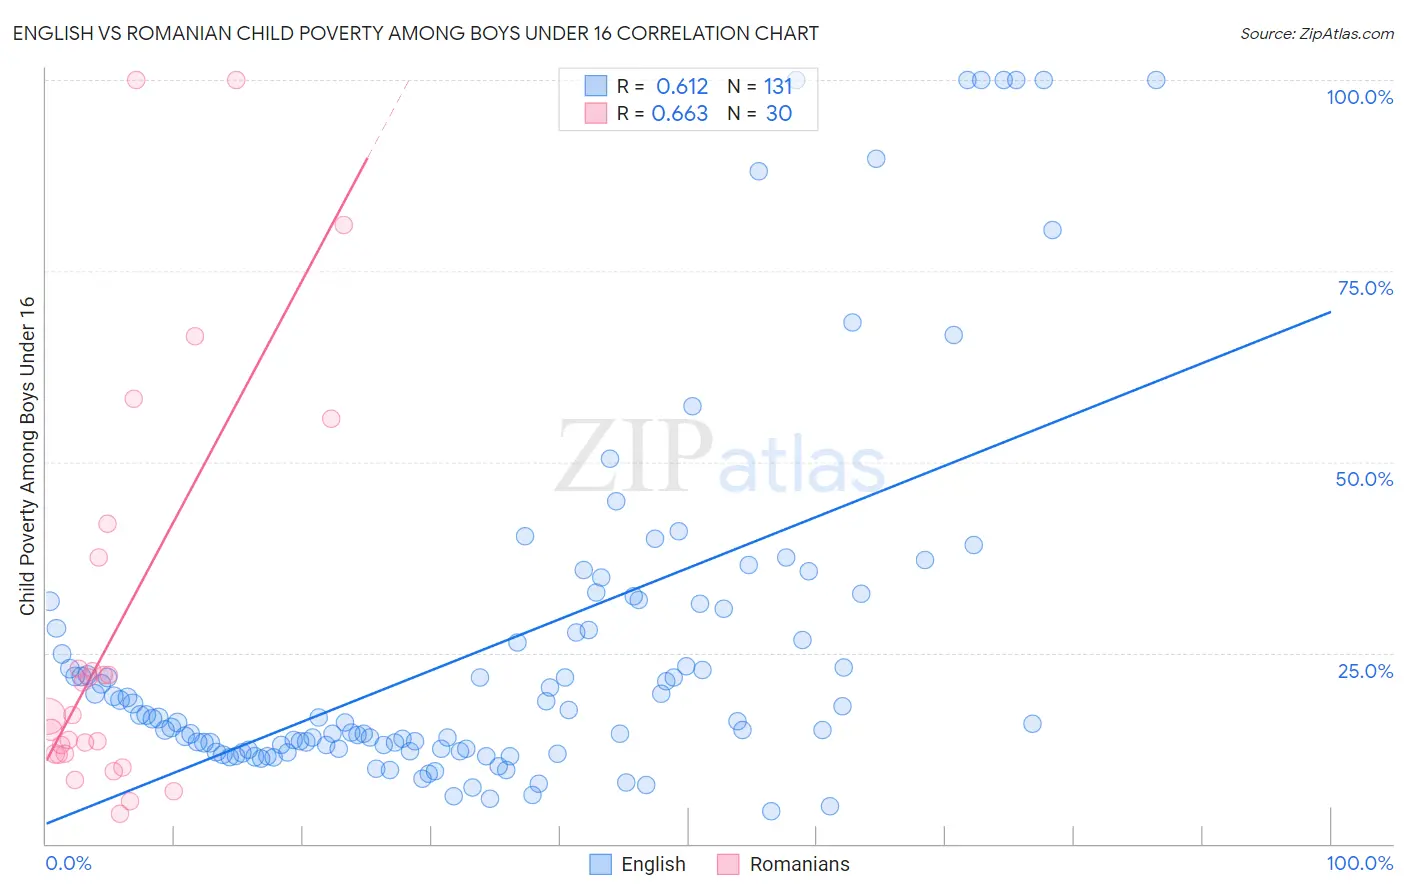 English vs Romanian Child Poverty Among Boys Under 16